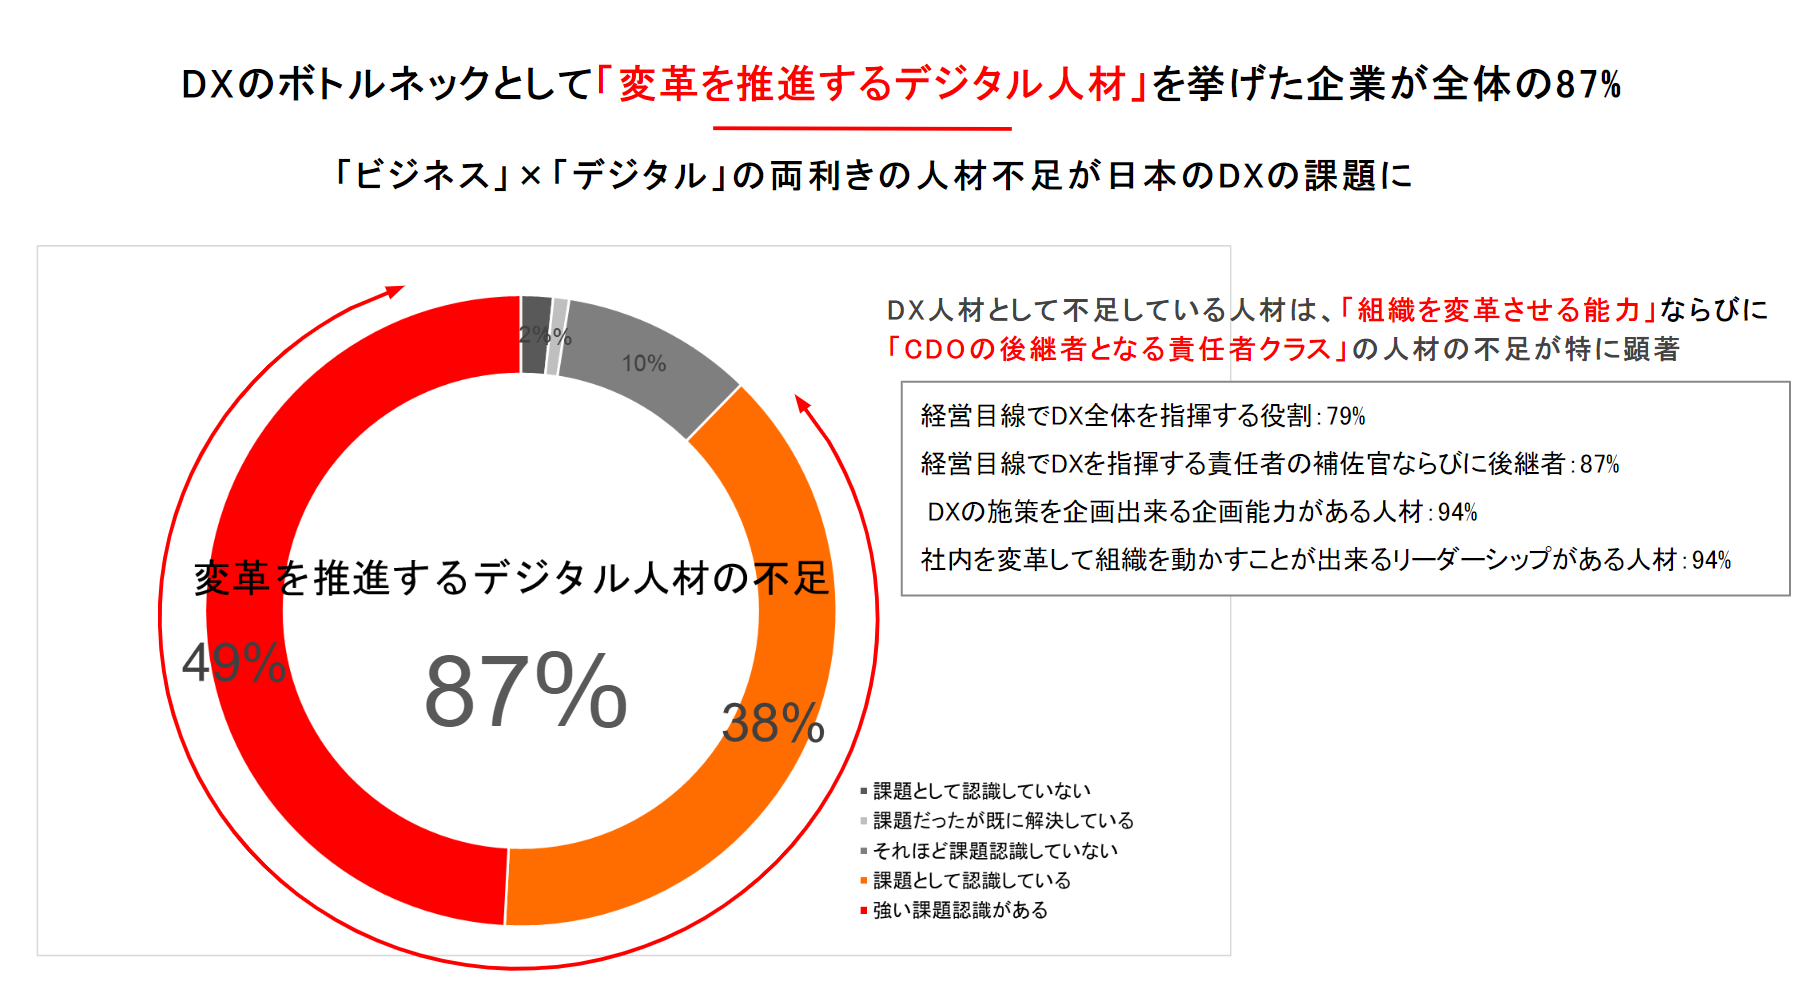 CDO Club Japanが「日本国内におけるデジタル人材の実態」などを調査